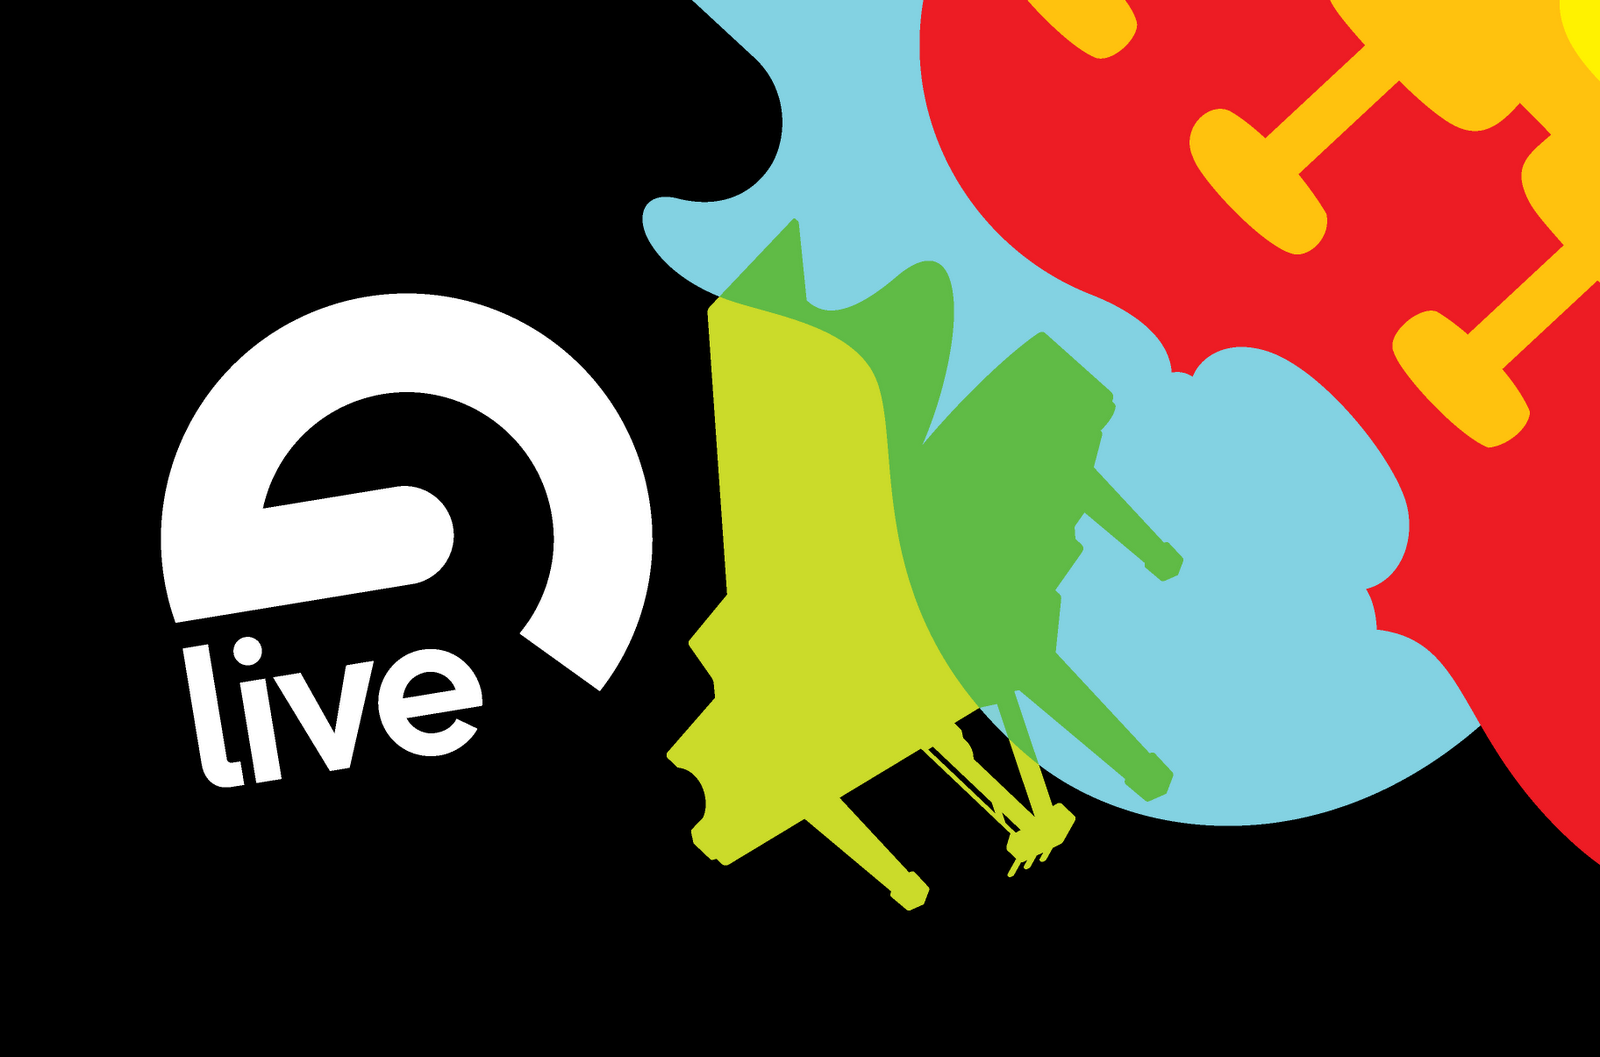 Ableton Live Logo Wallpaper